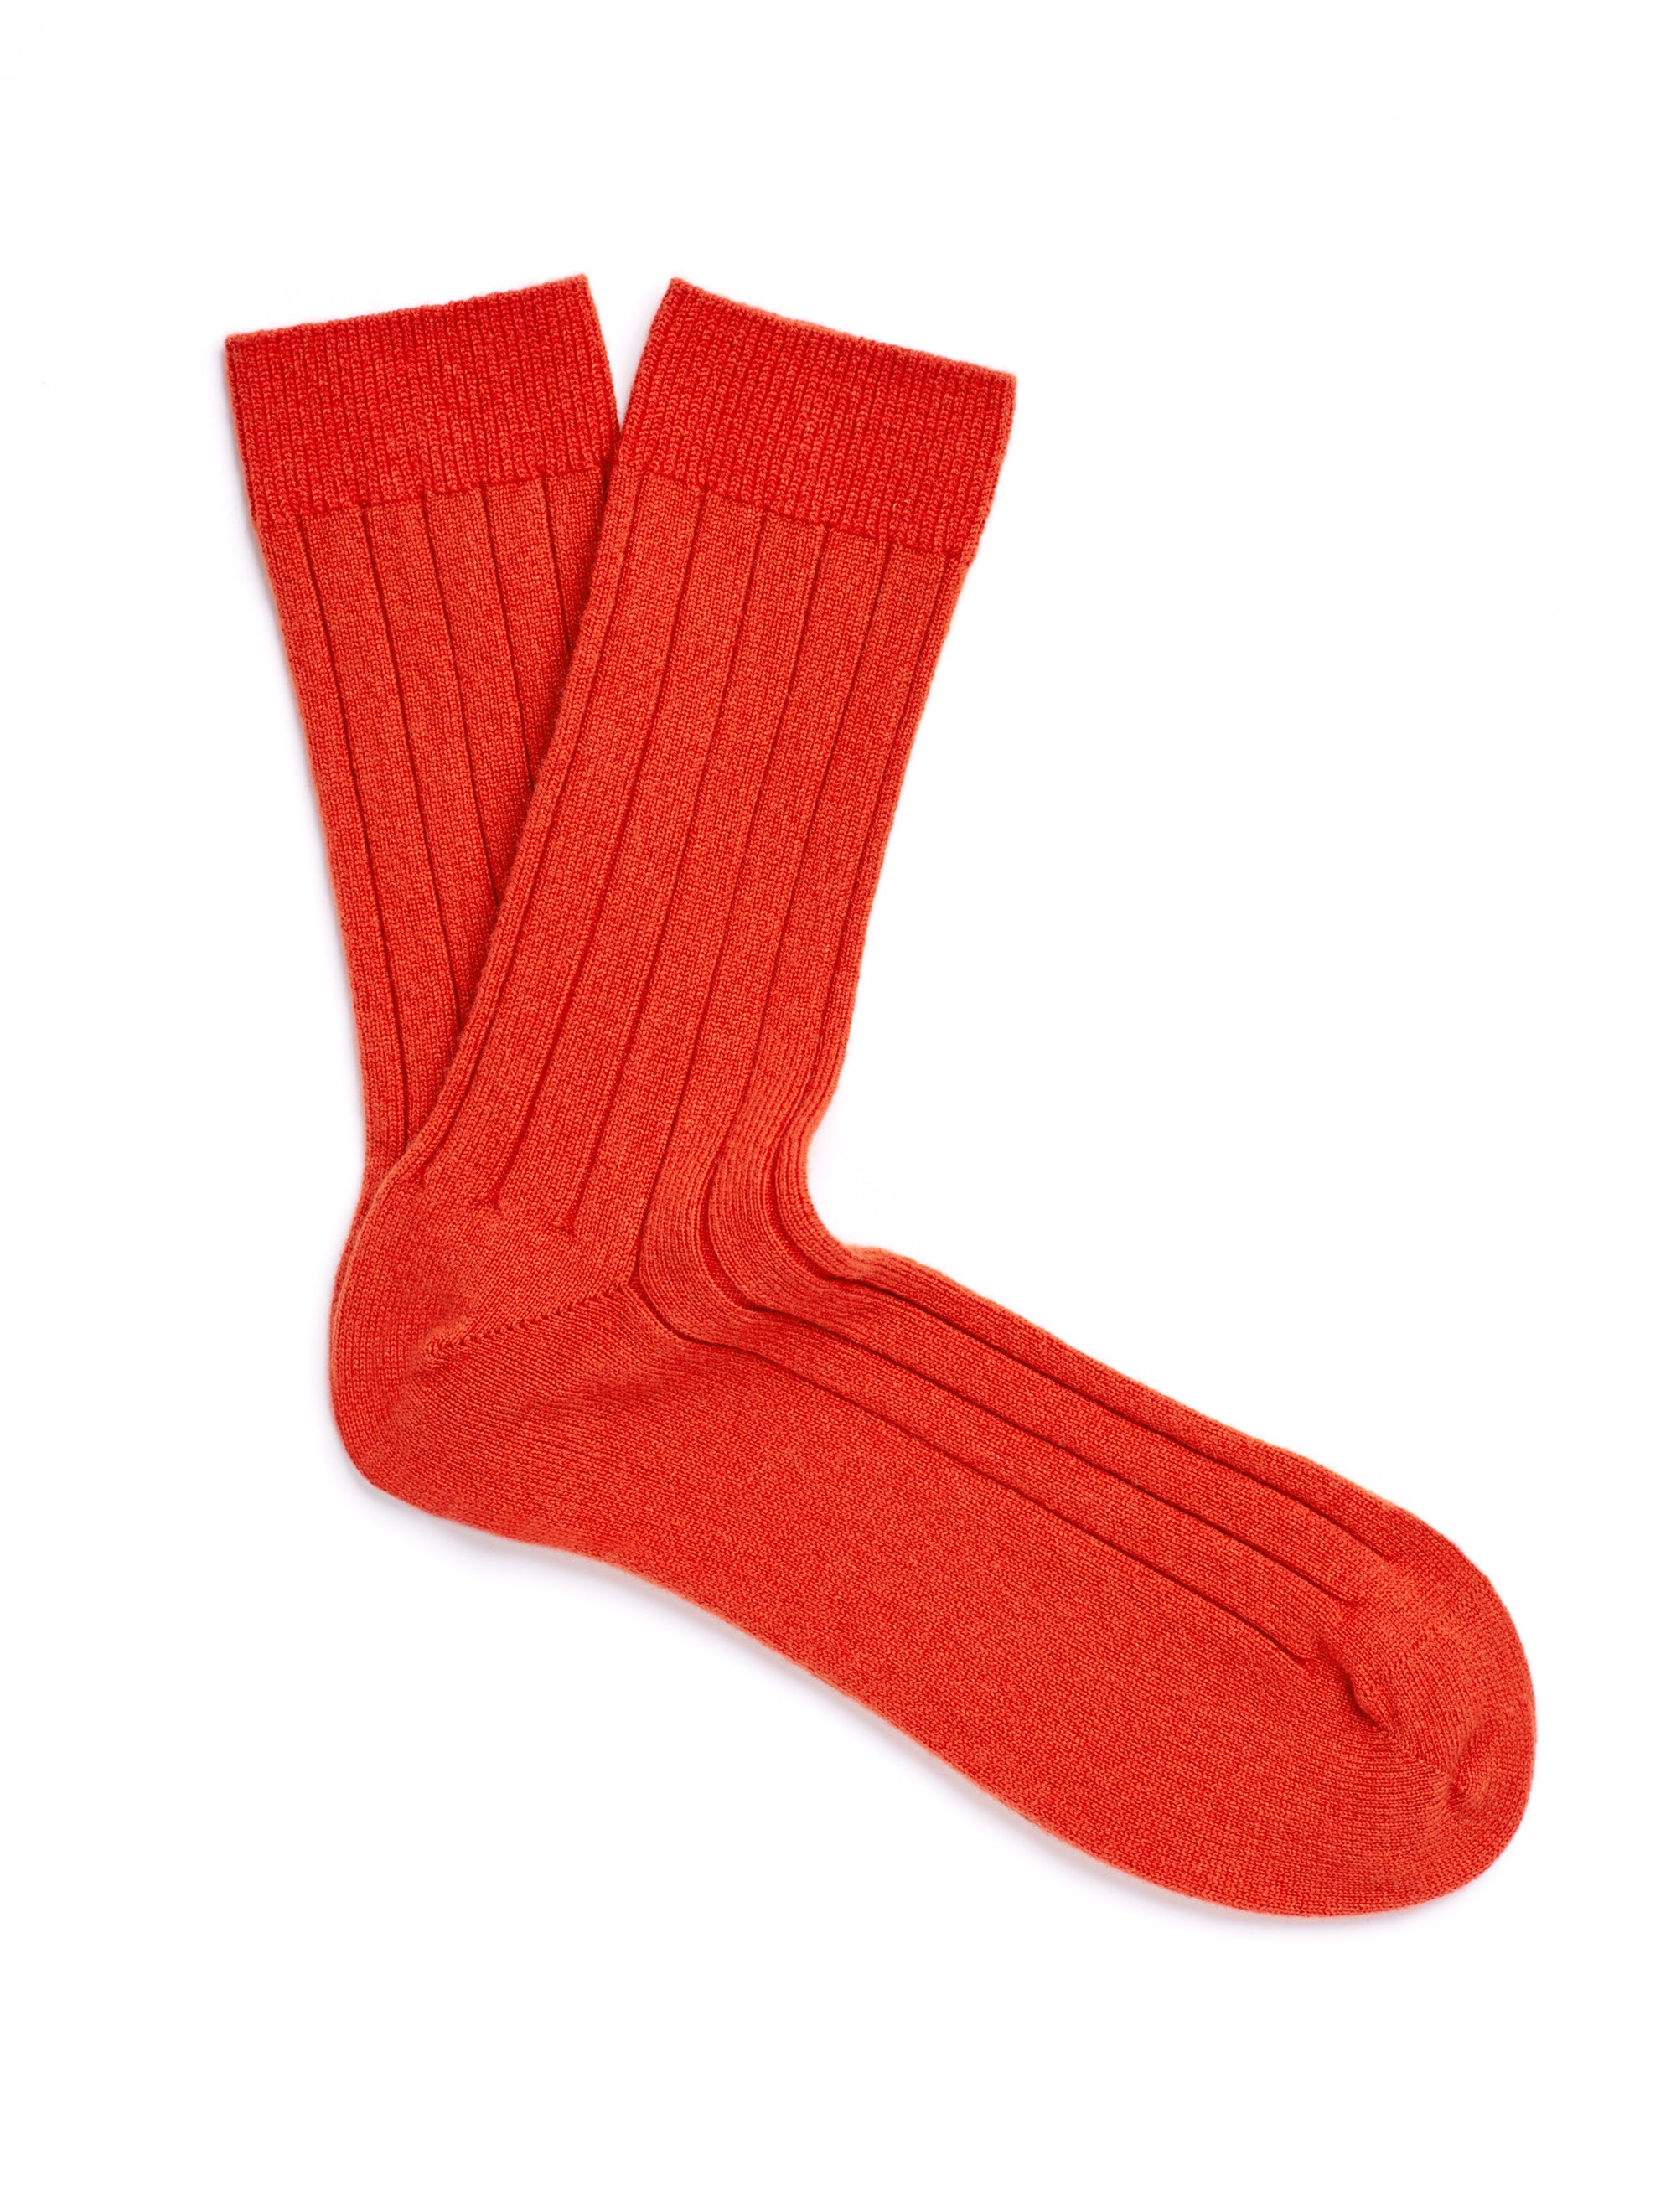 Solespun Black Label Cashmere Socks in Soley Orange (NEW)